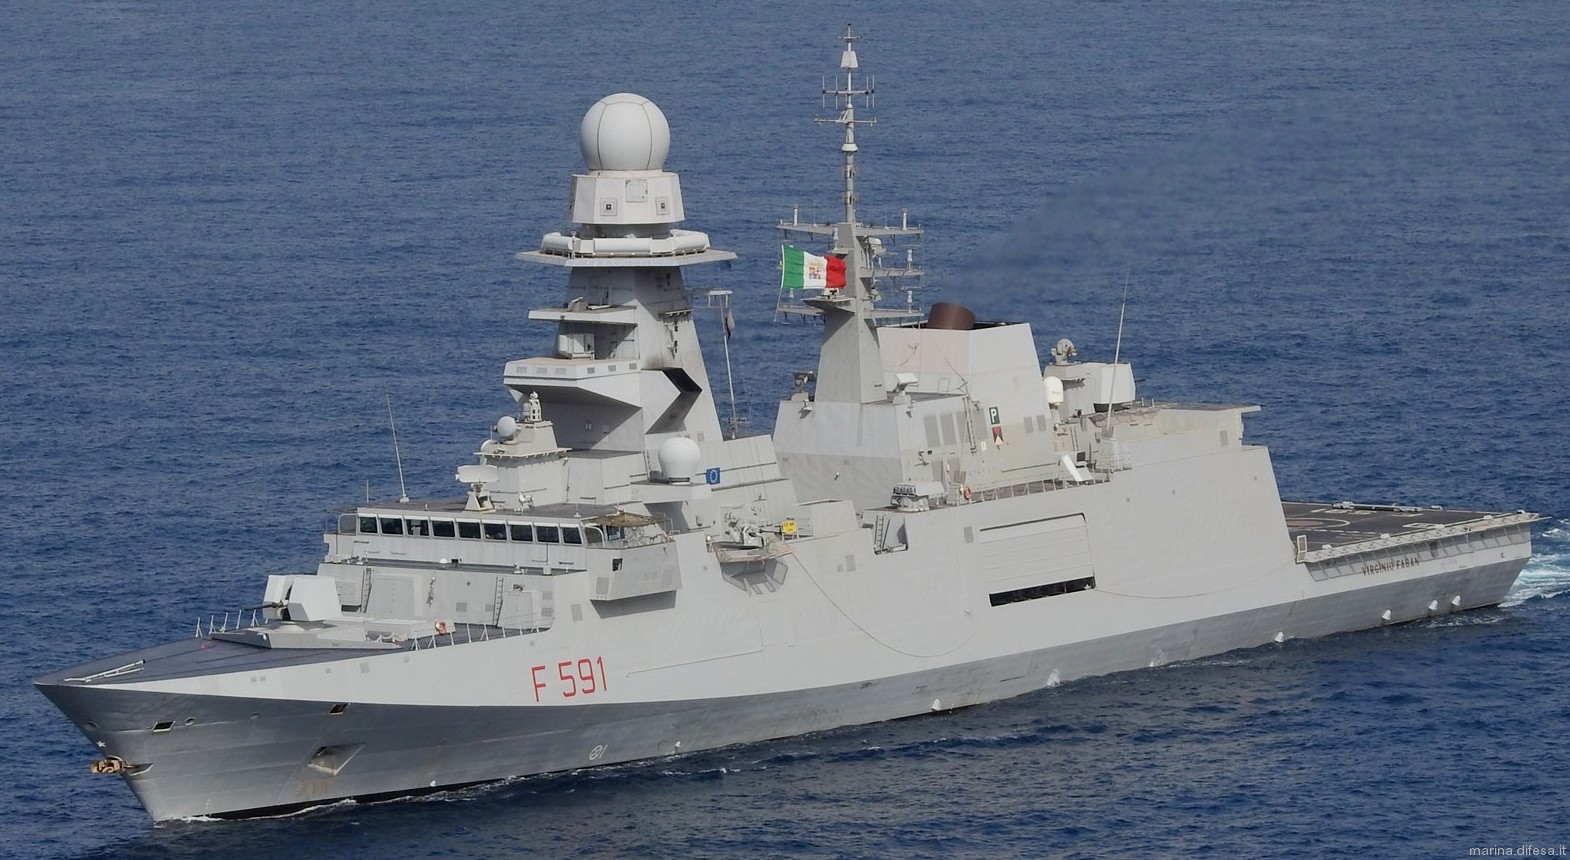 f-591 virginio fasan its nave bergamini fremm class guided missile frigate italian navy marina militare 50